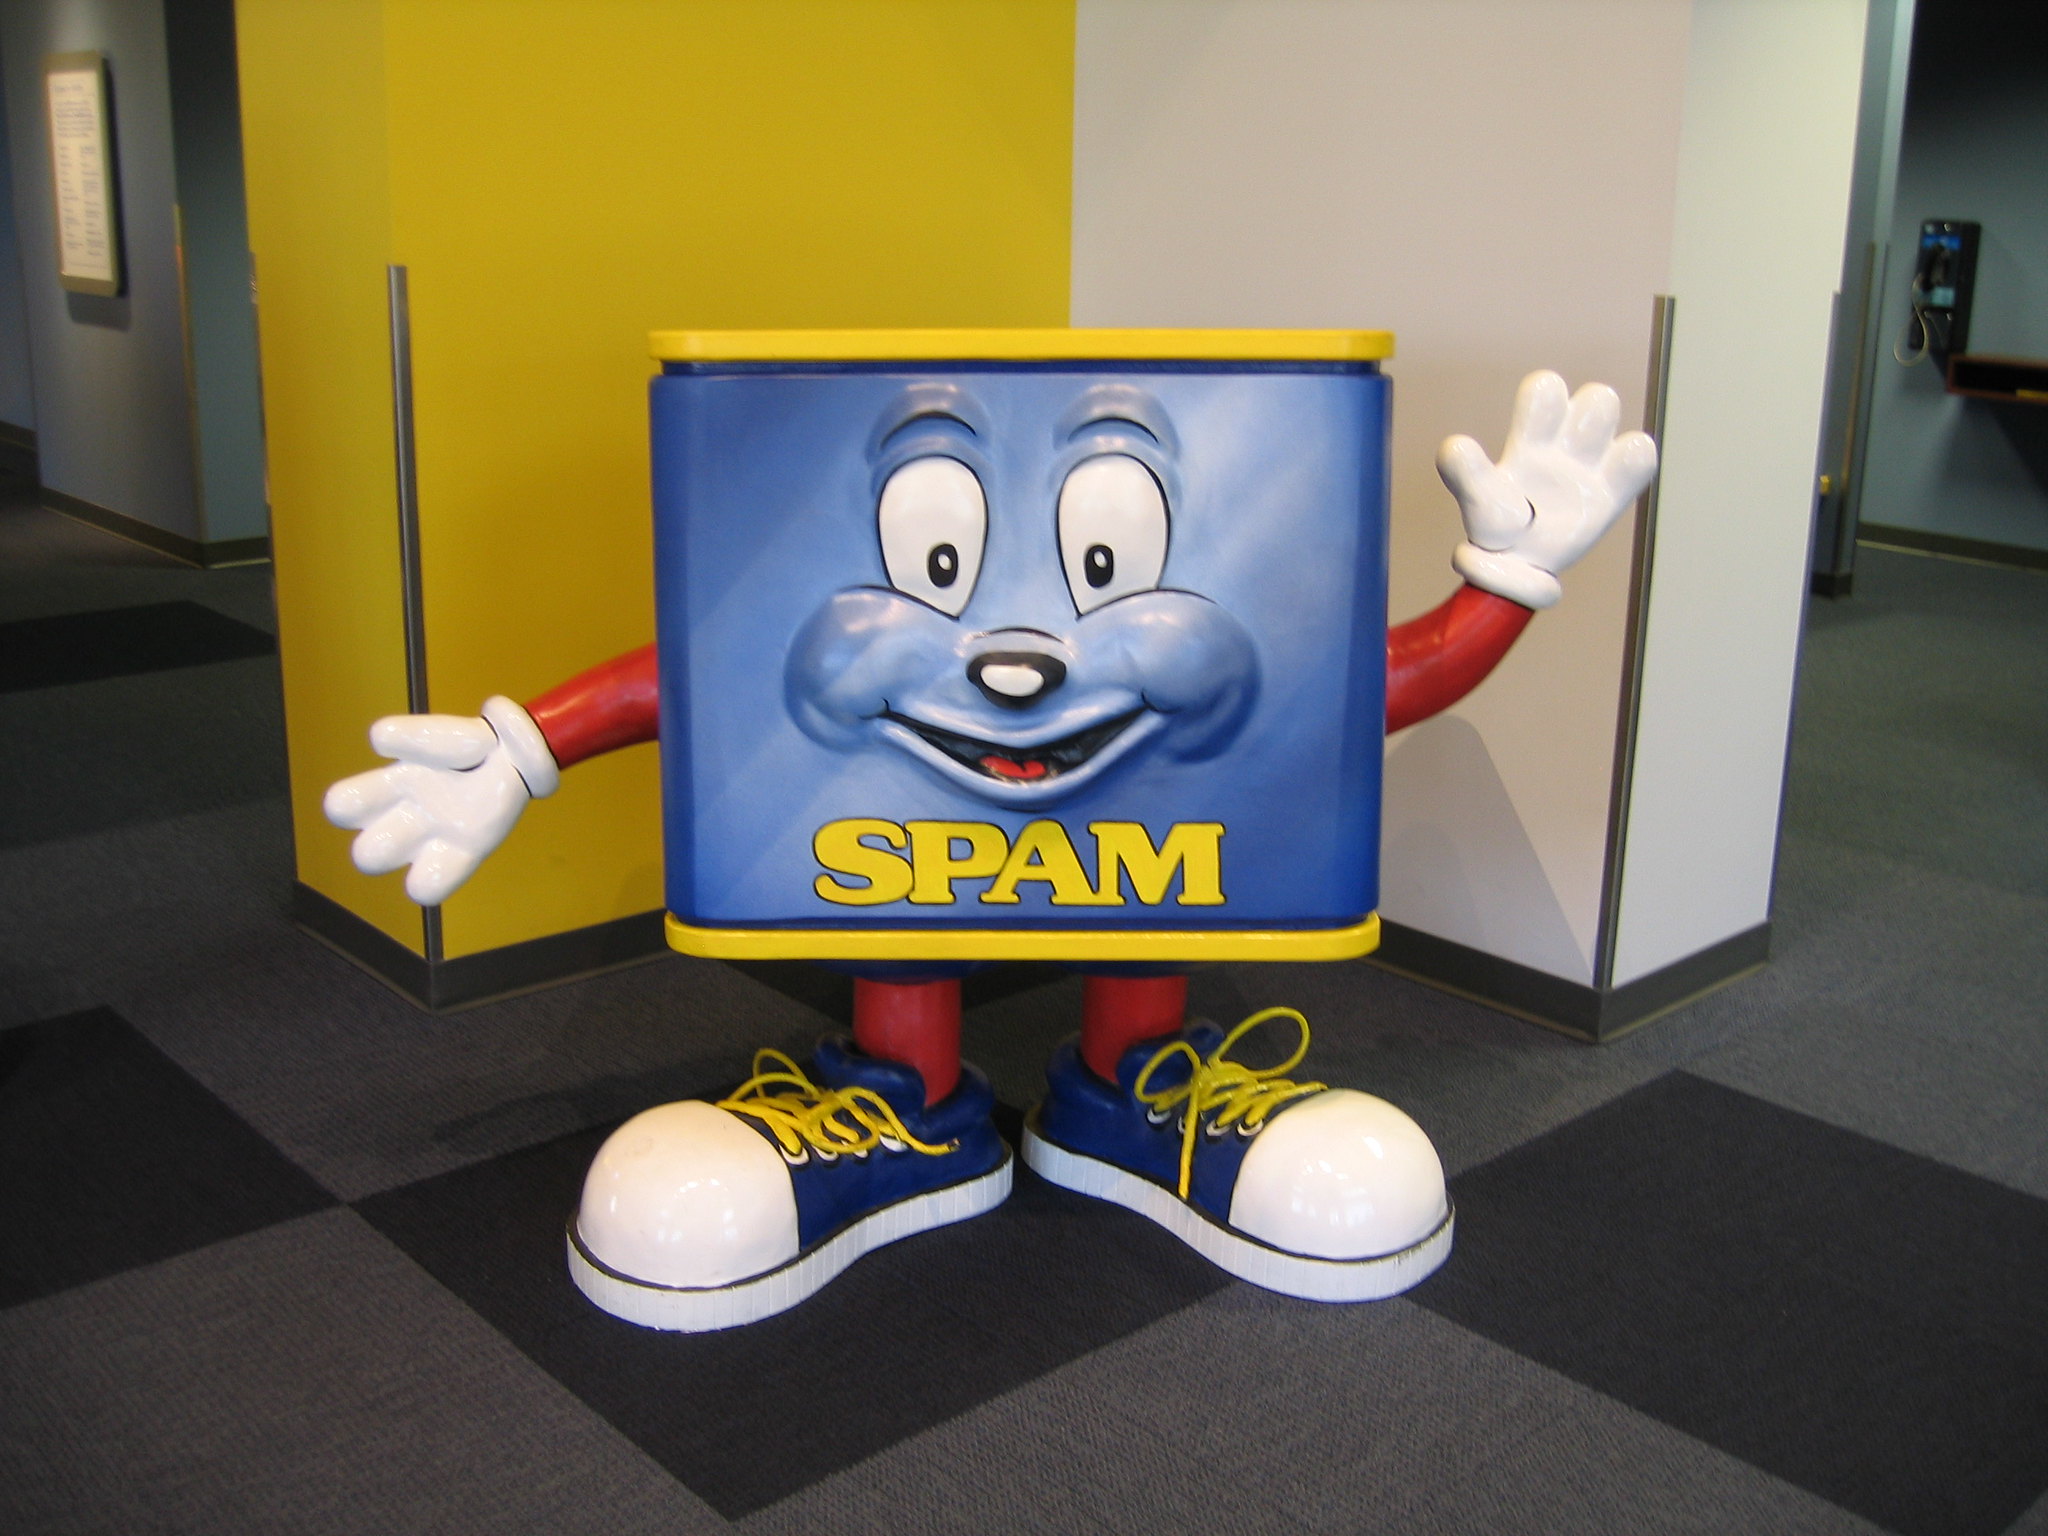 The Spam Mascot